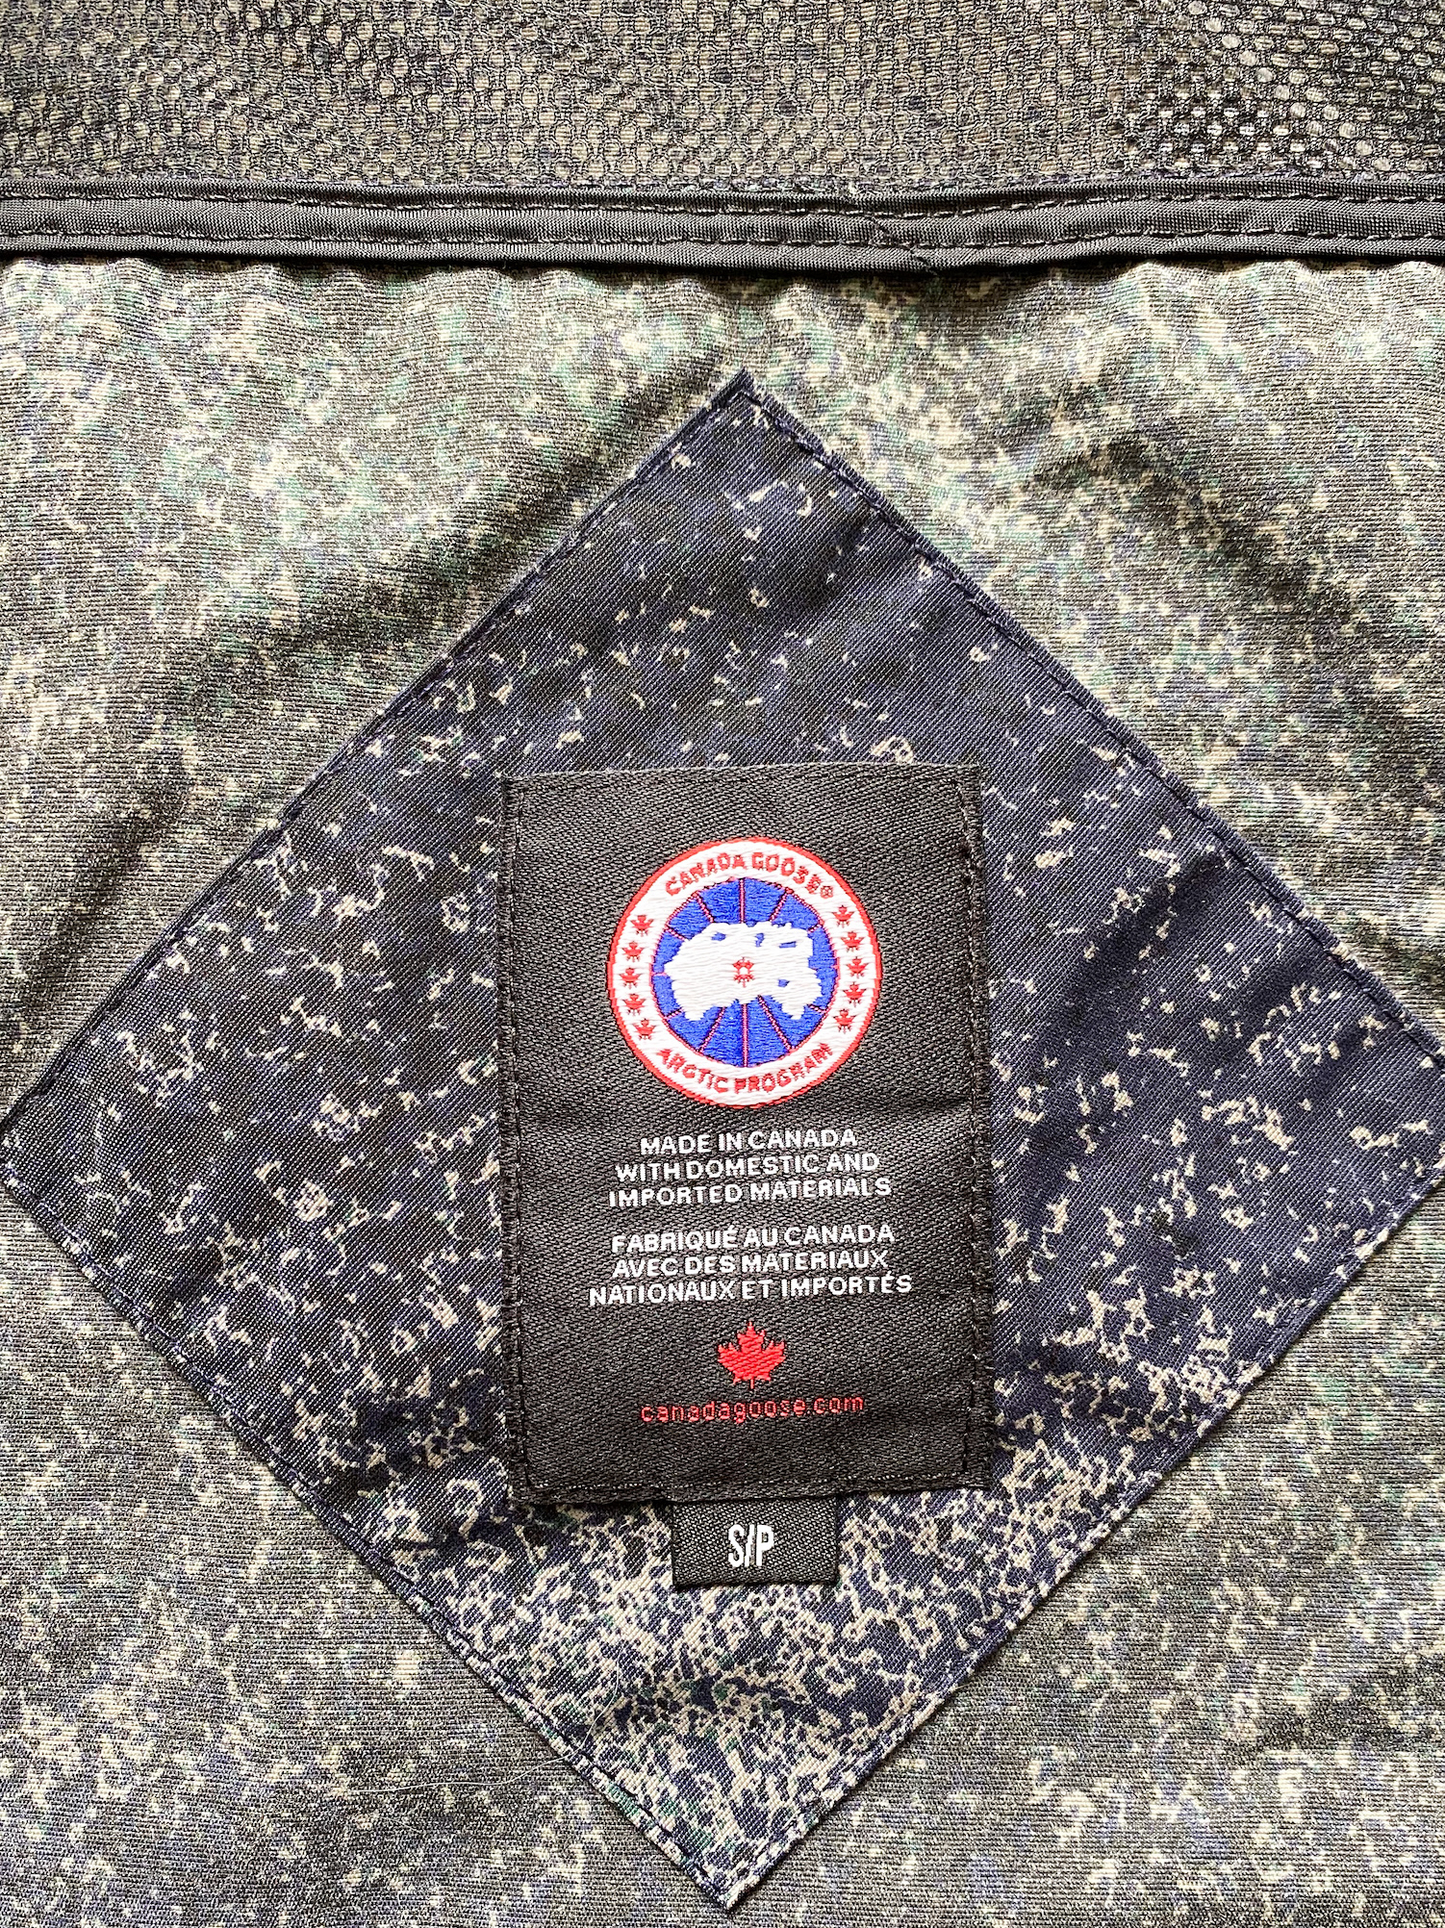 Canada Goose Navy Sandstorm Camo Voyager Men's Jacket